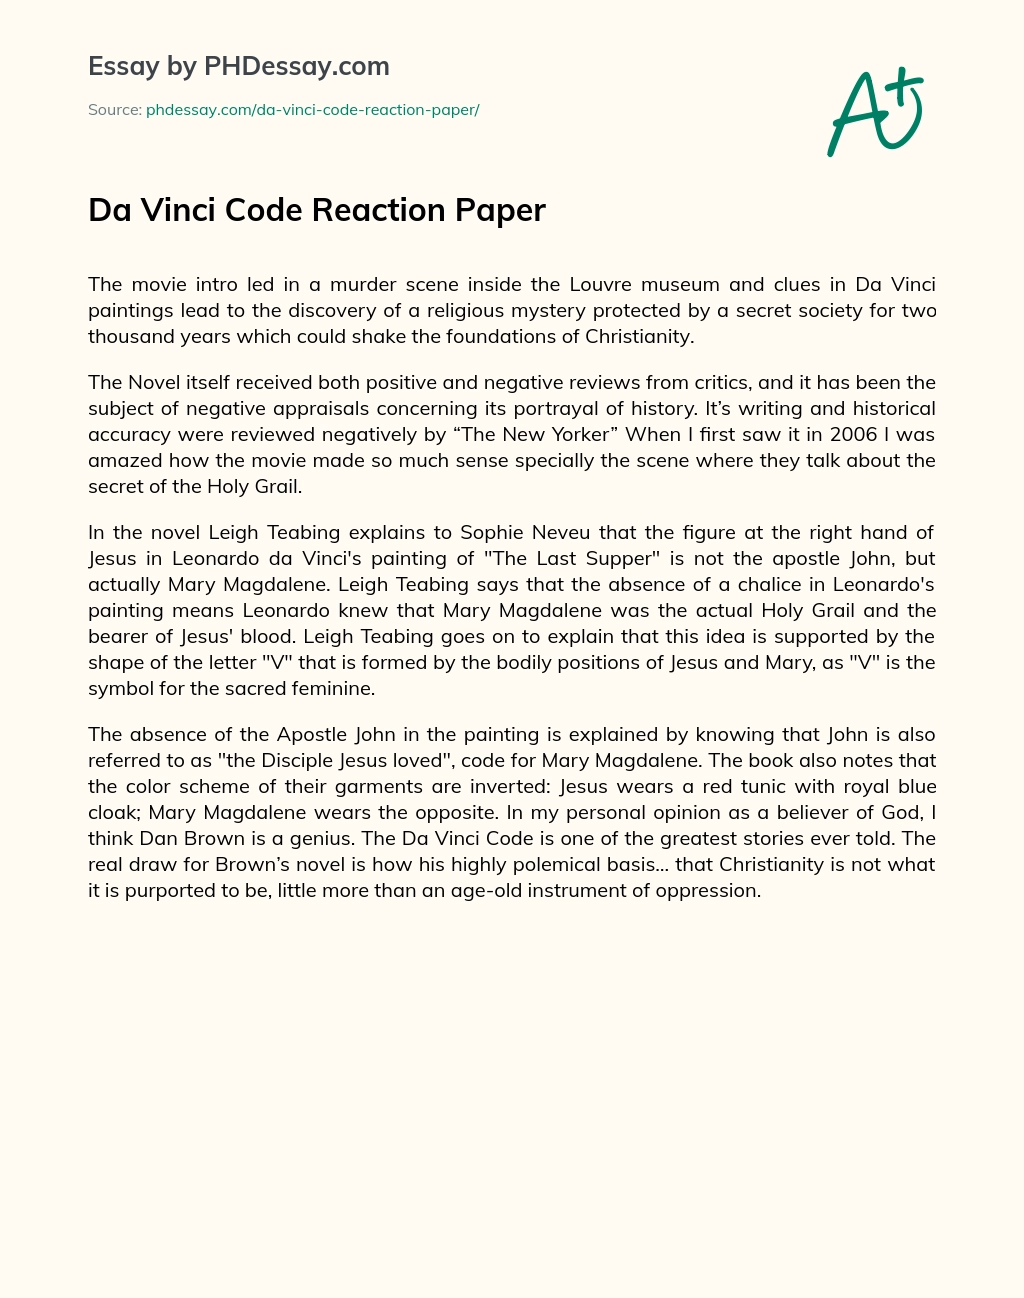 Da Vinci Code Reaction Paper essay